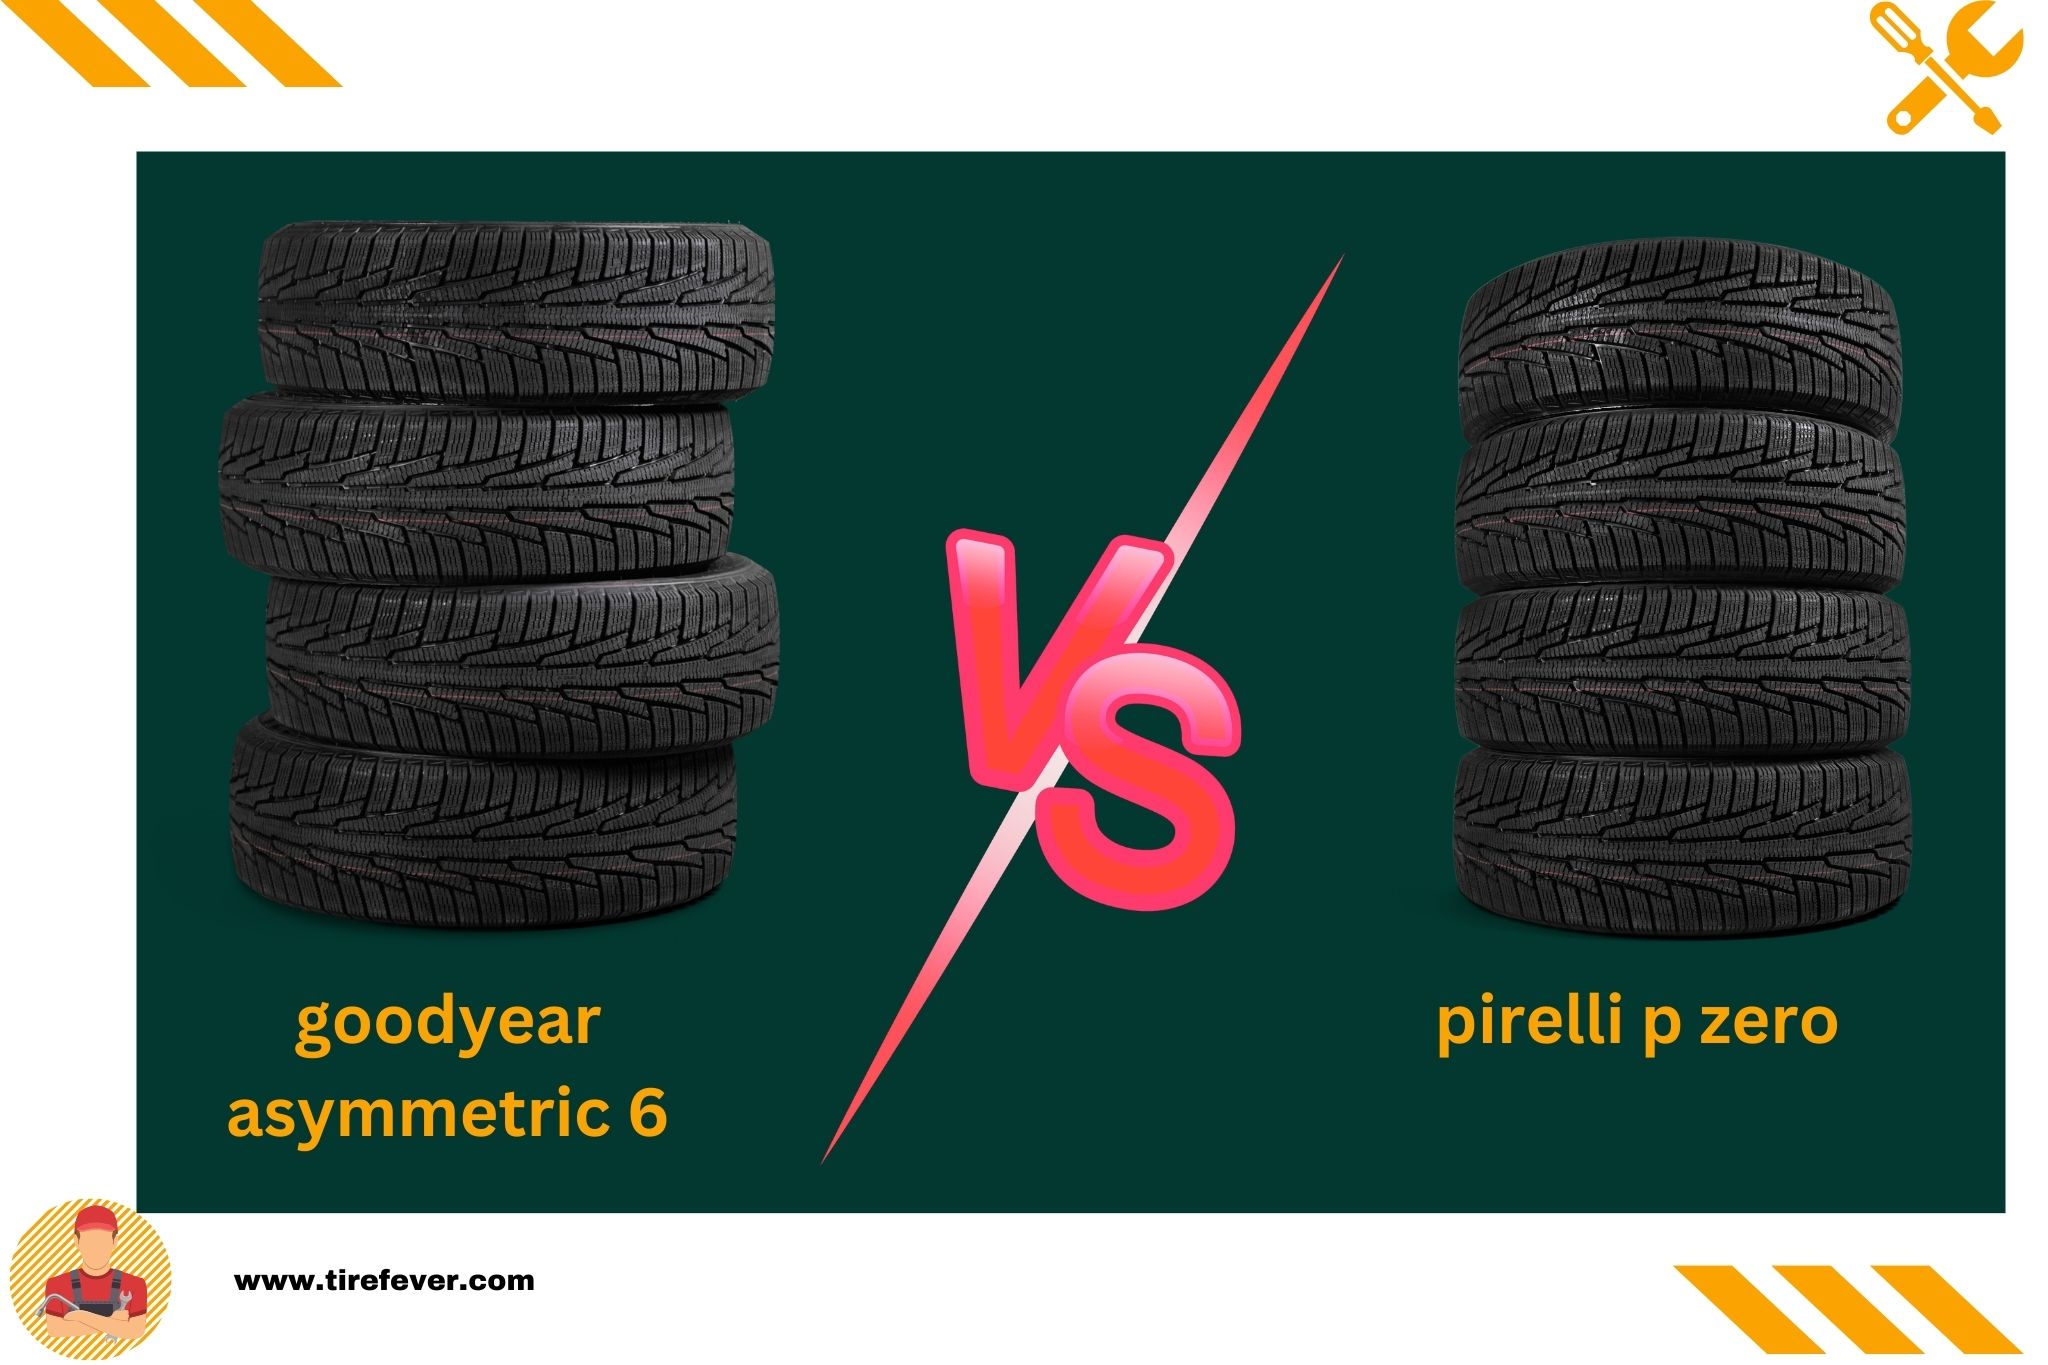 goodyear asymmetric 6 vs pirelli p zero